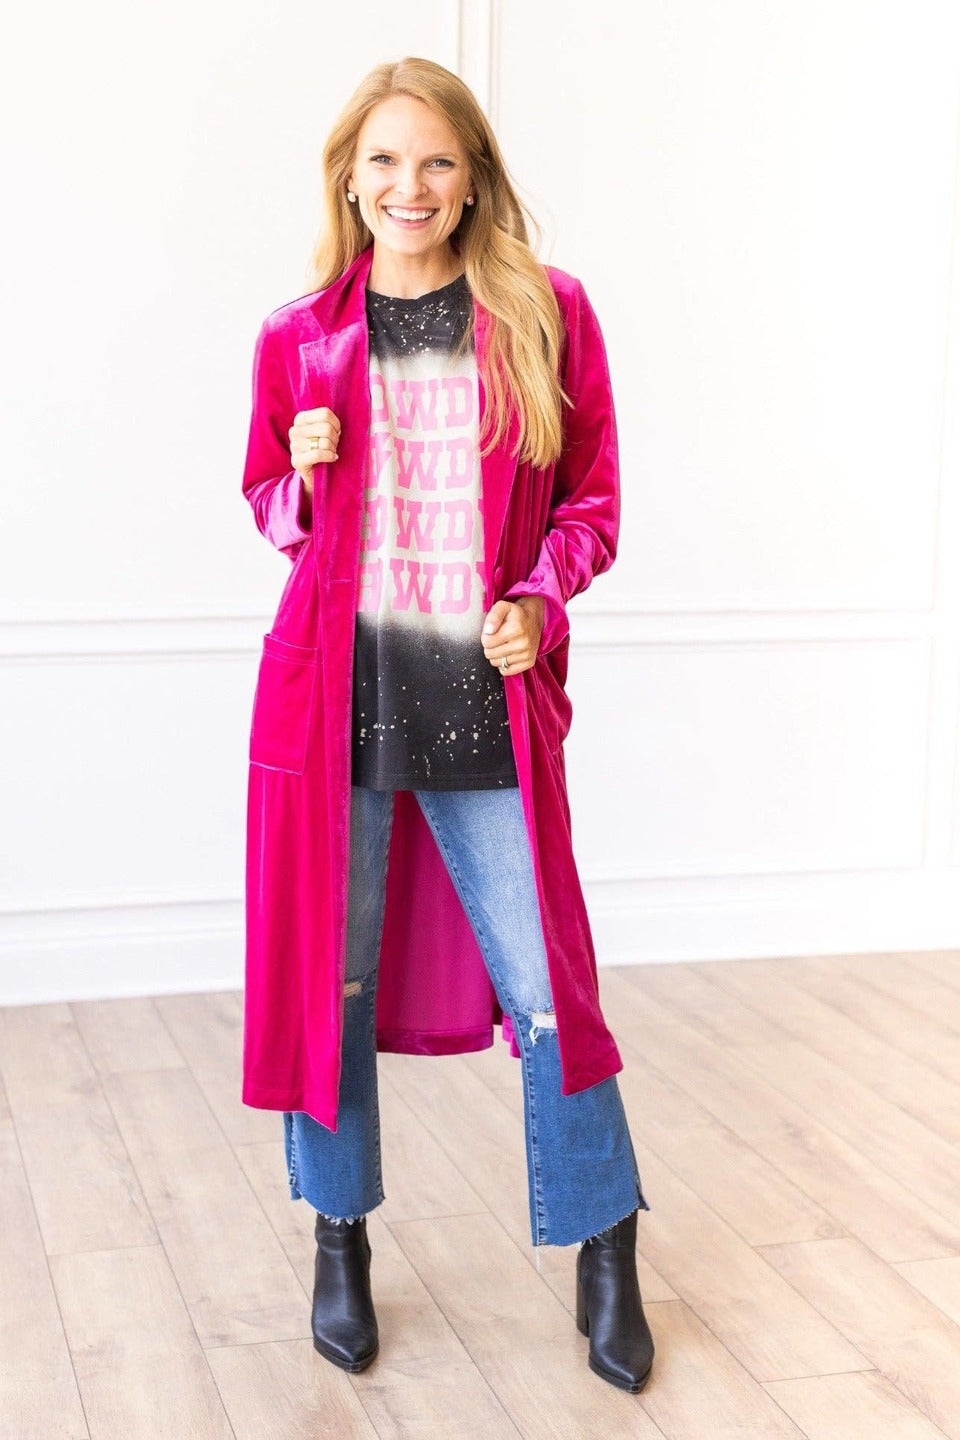 Southern Grace - Hard Candy Velvet Jacket in Hot Pink